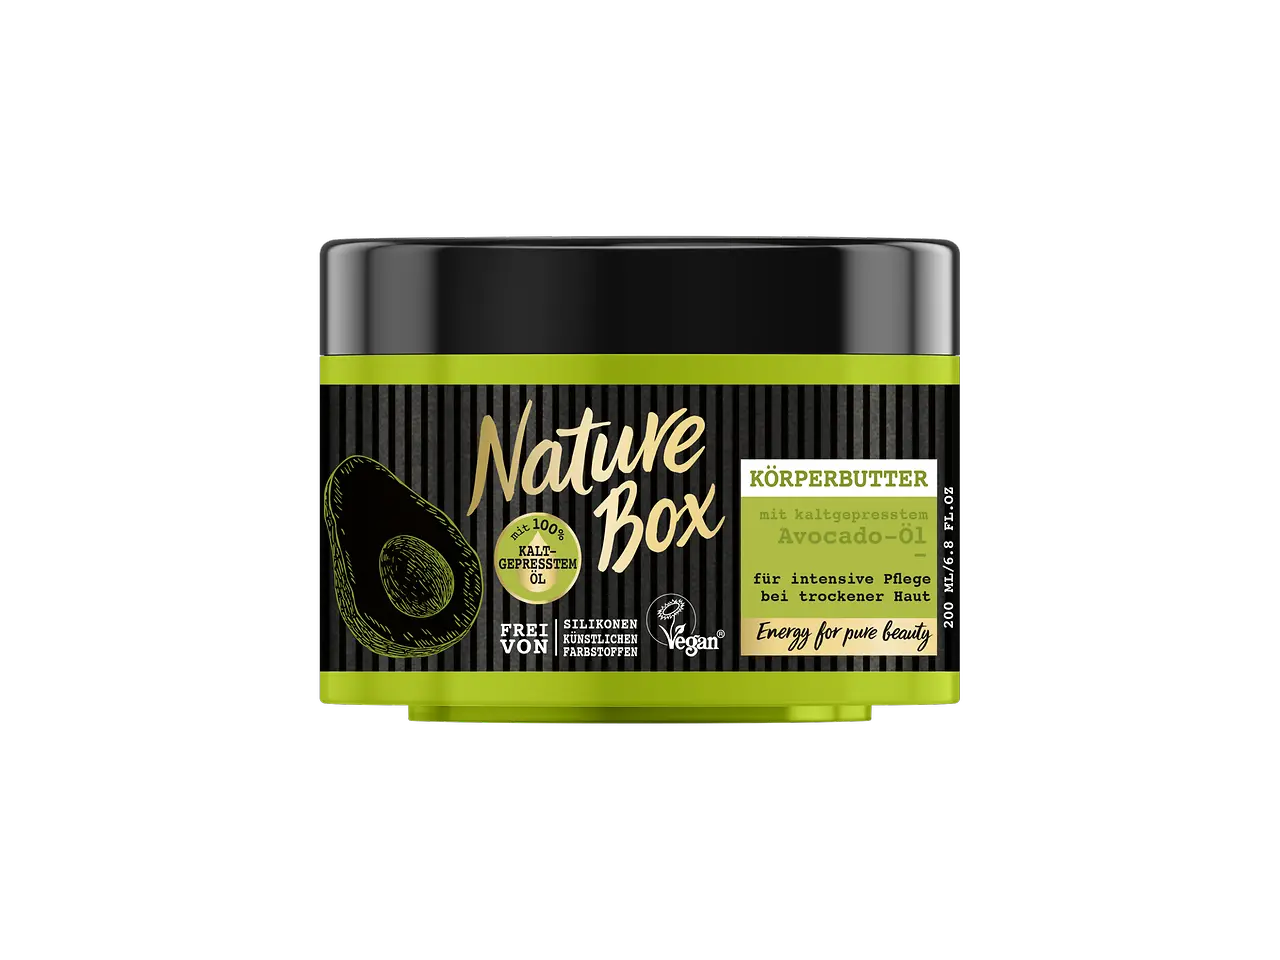 Nature Box Körperbutter Avocado